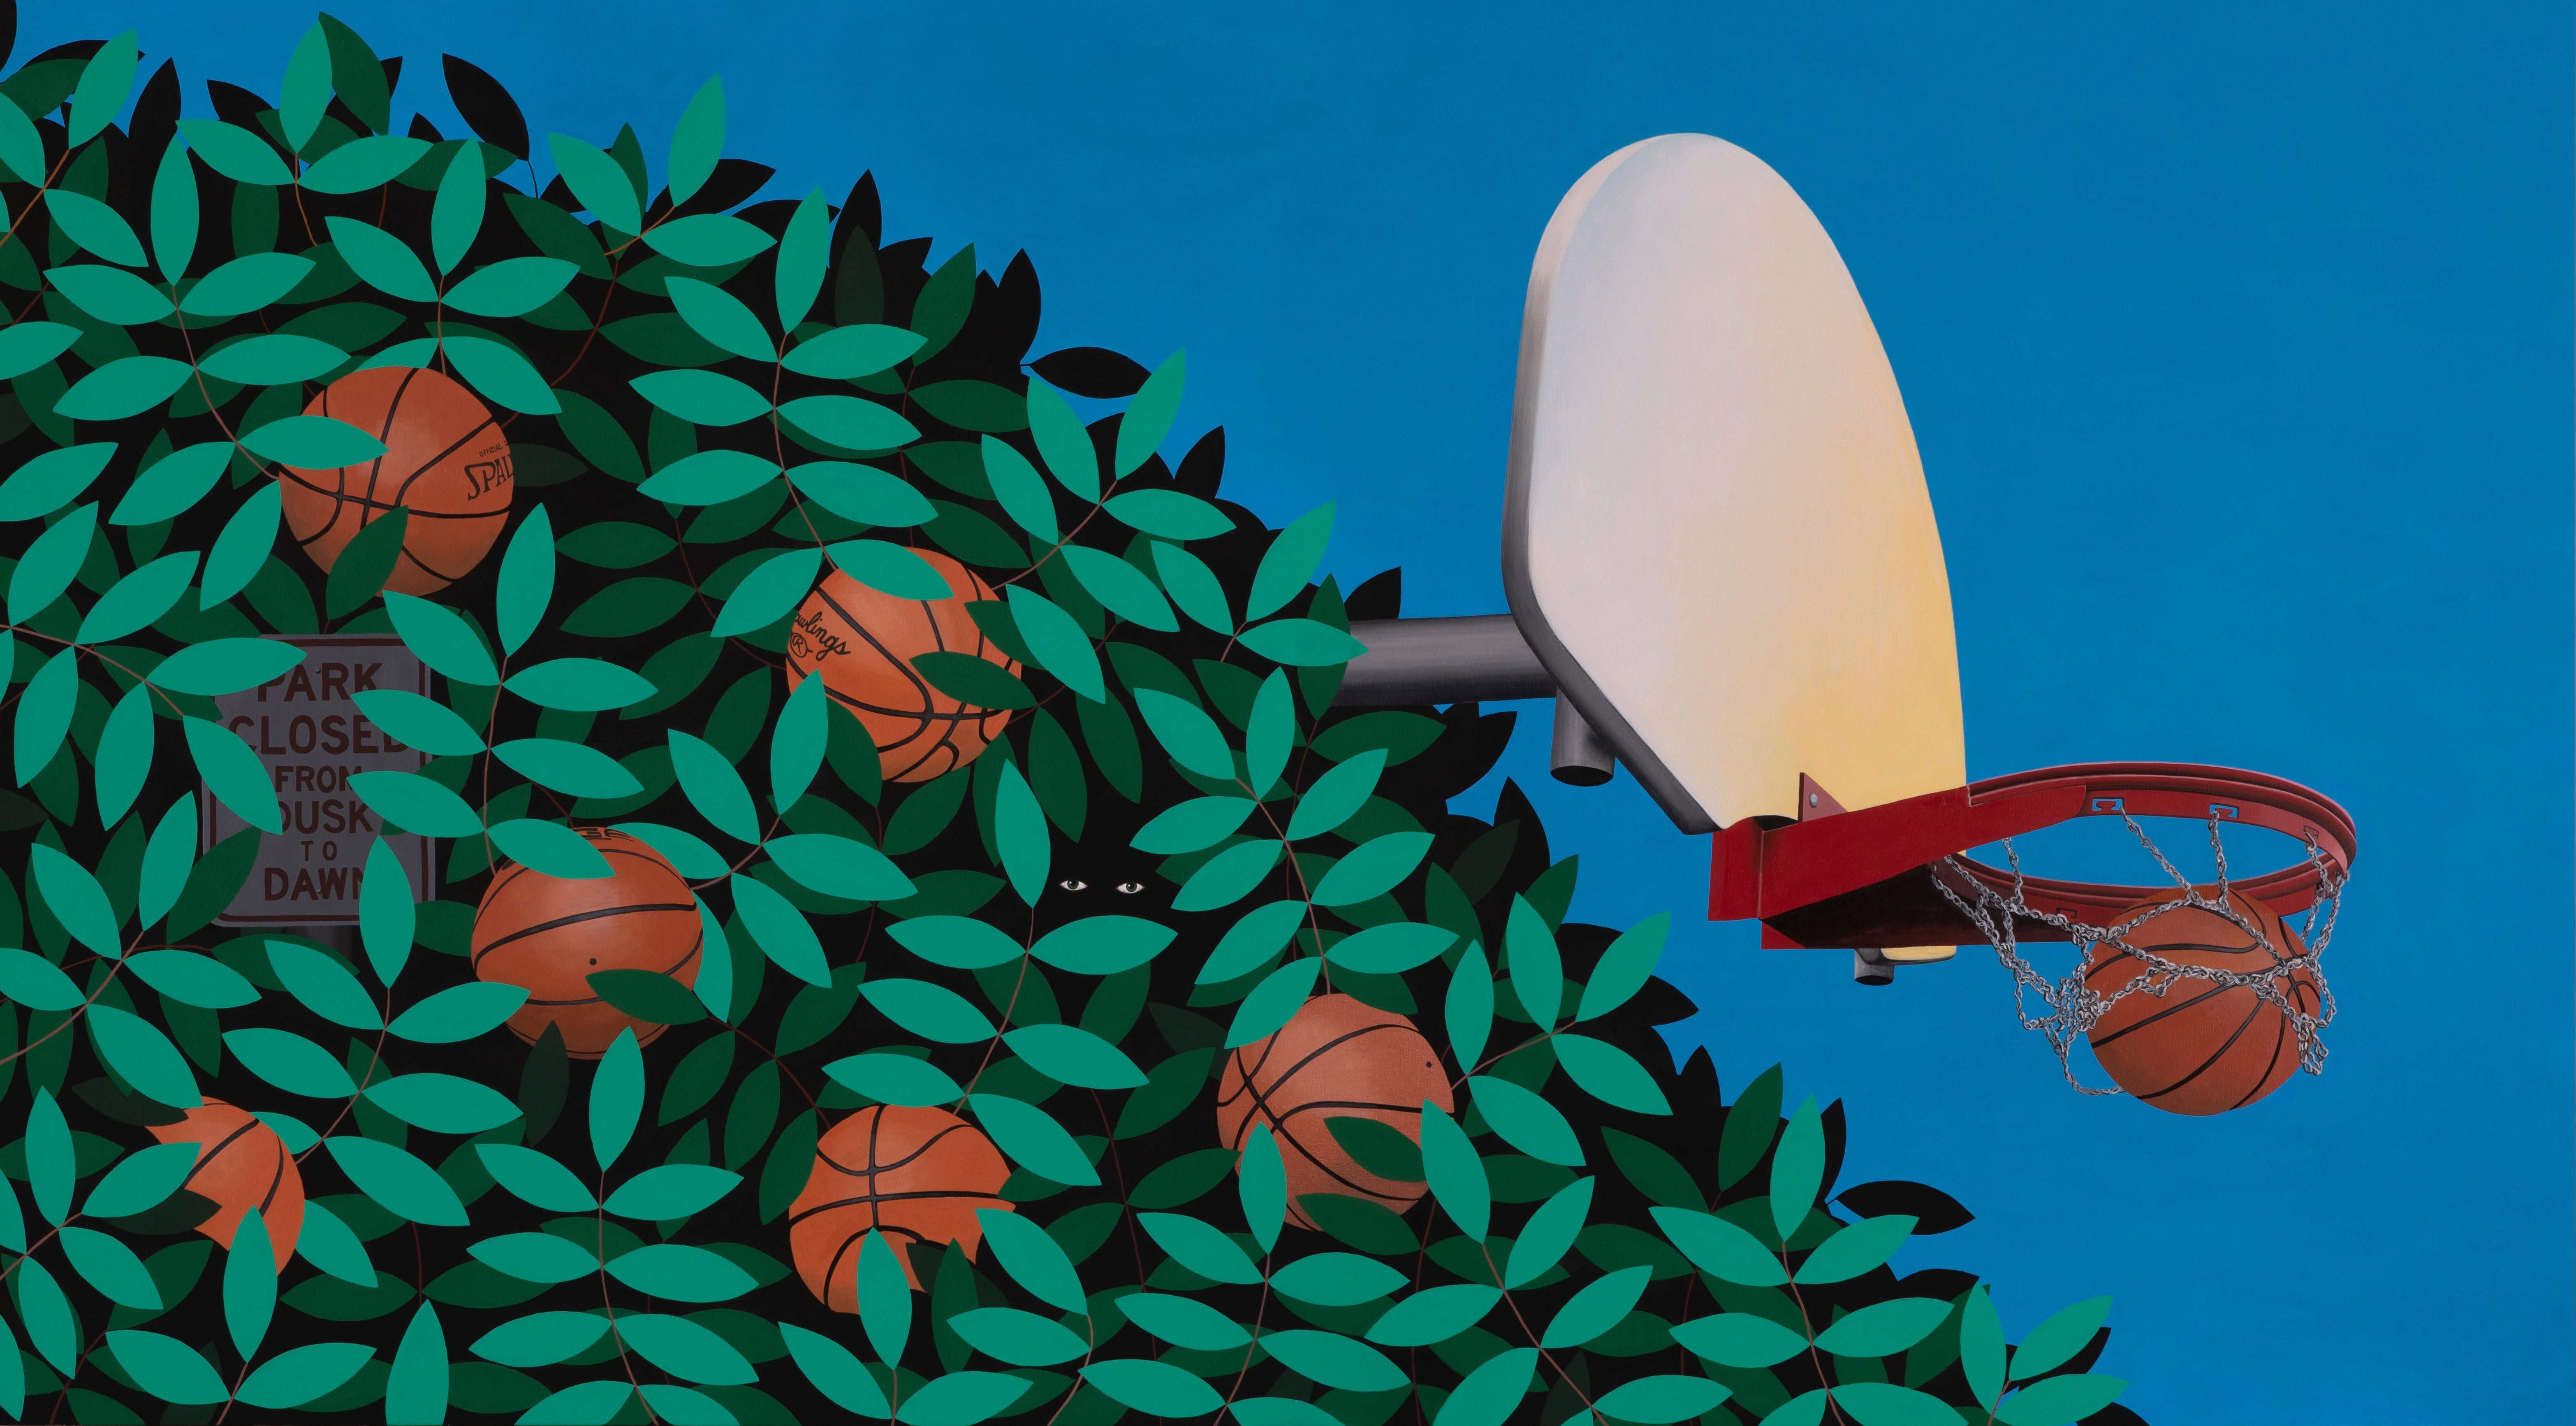 John Garrett Slaby Landscape Print - Parable (poster print); basketball, foliage, sky, blue & green